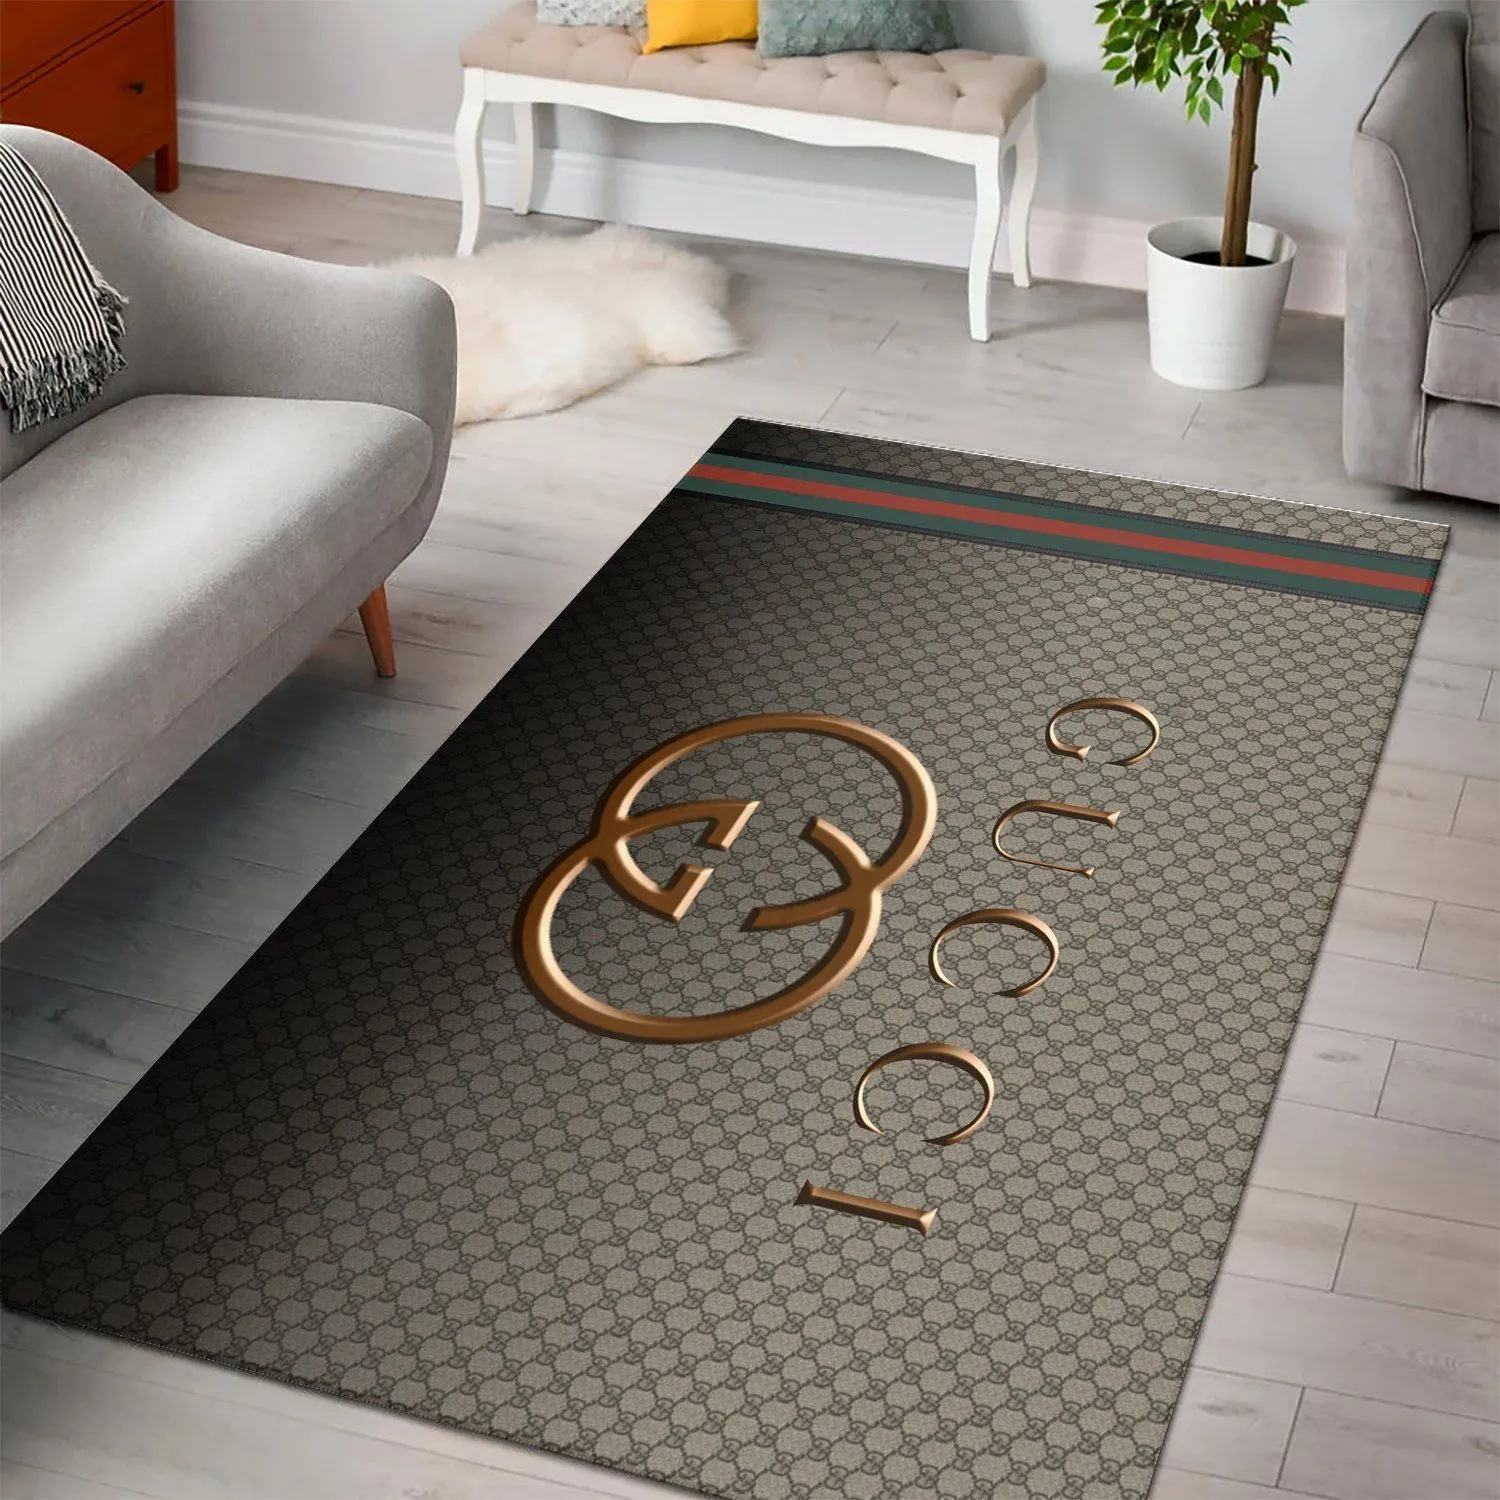 Gucci Monogram Rectangle Rug Luxury Area Carpet Fashion Brand Door Mat Home Decor